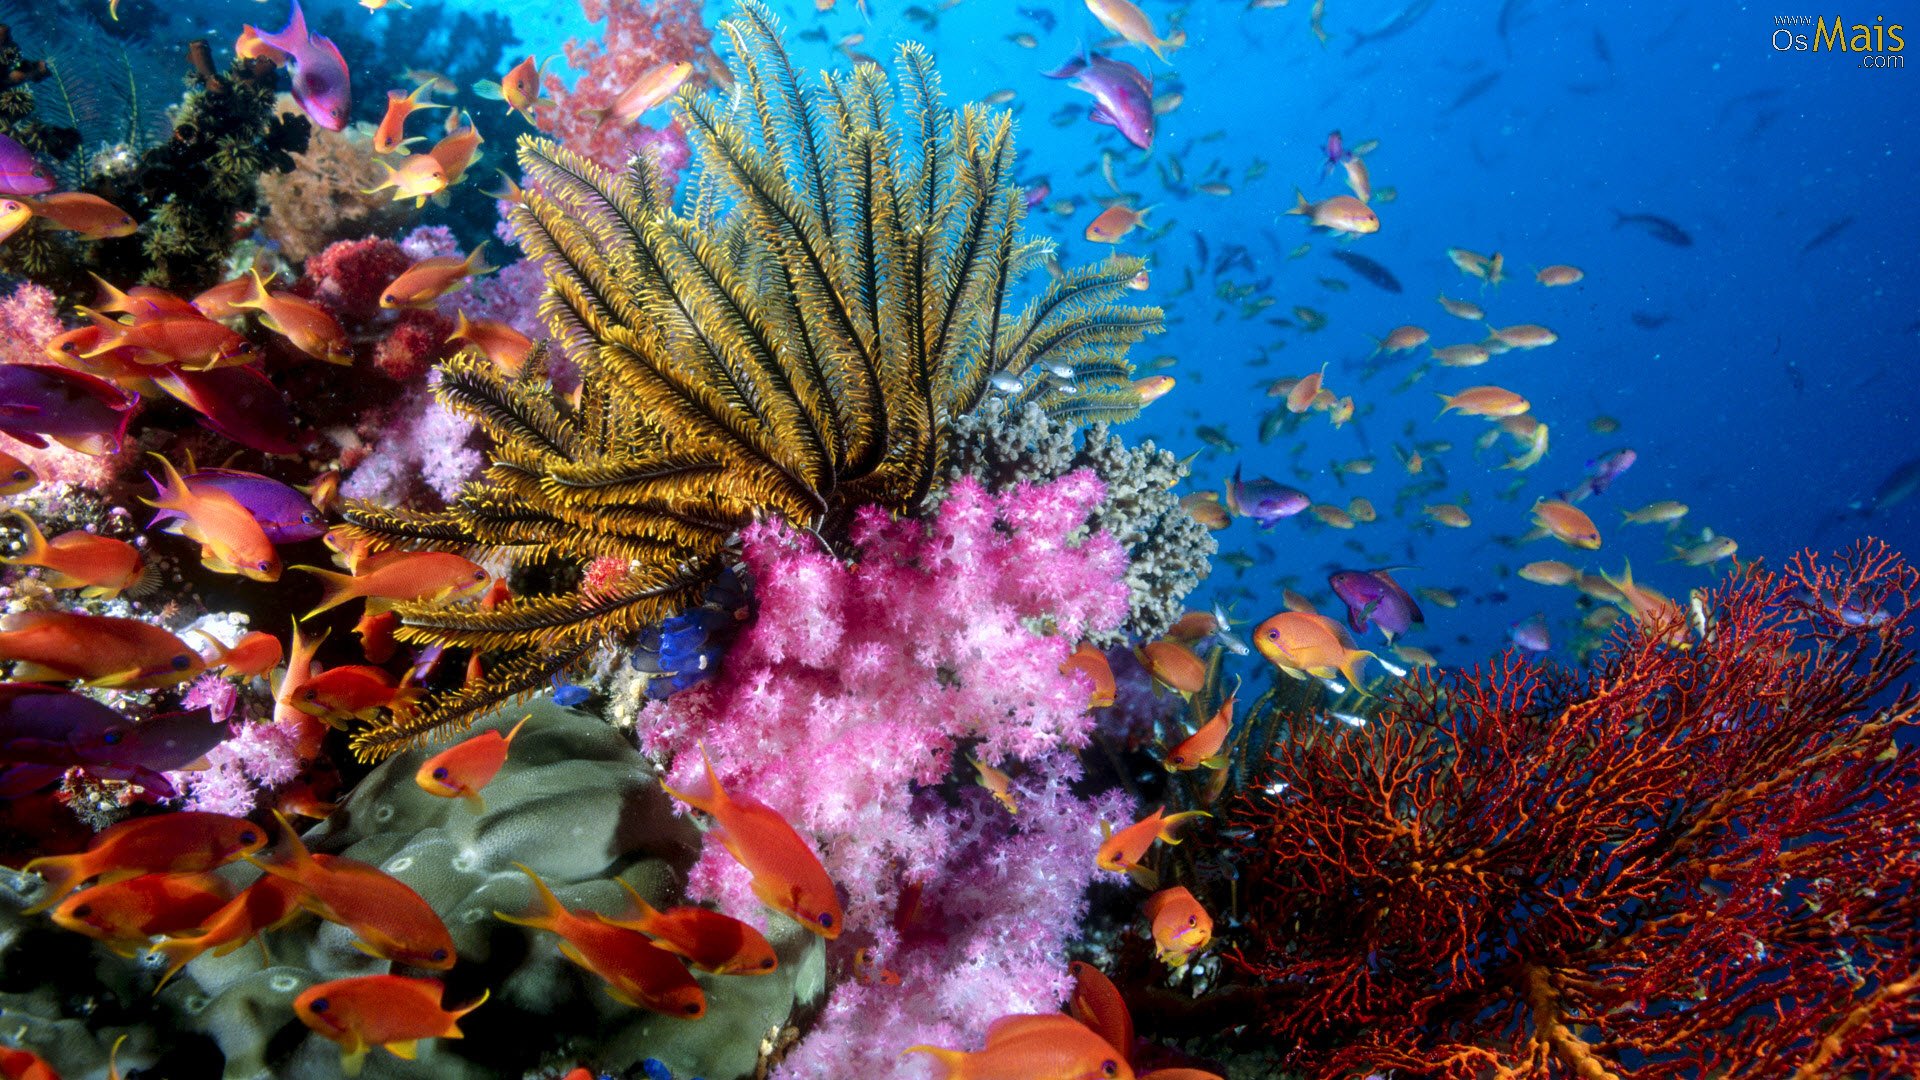 fondos de pantalla fundo do mar,arrecife,arrecife de coral,submarino,biología marina,peces de arrecife de coral